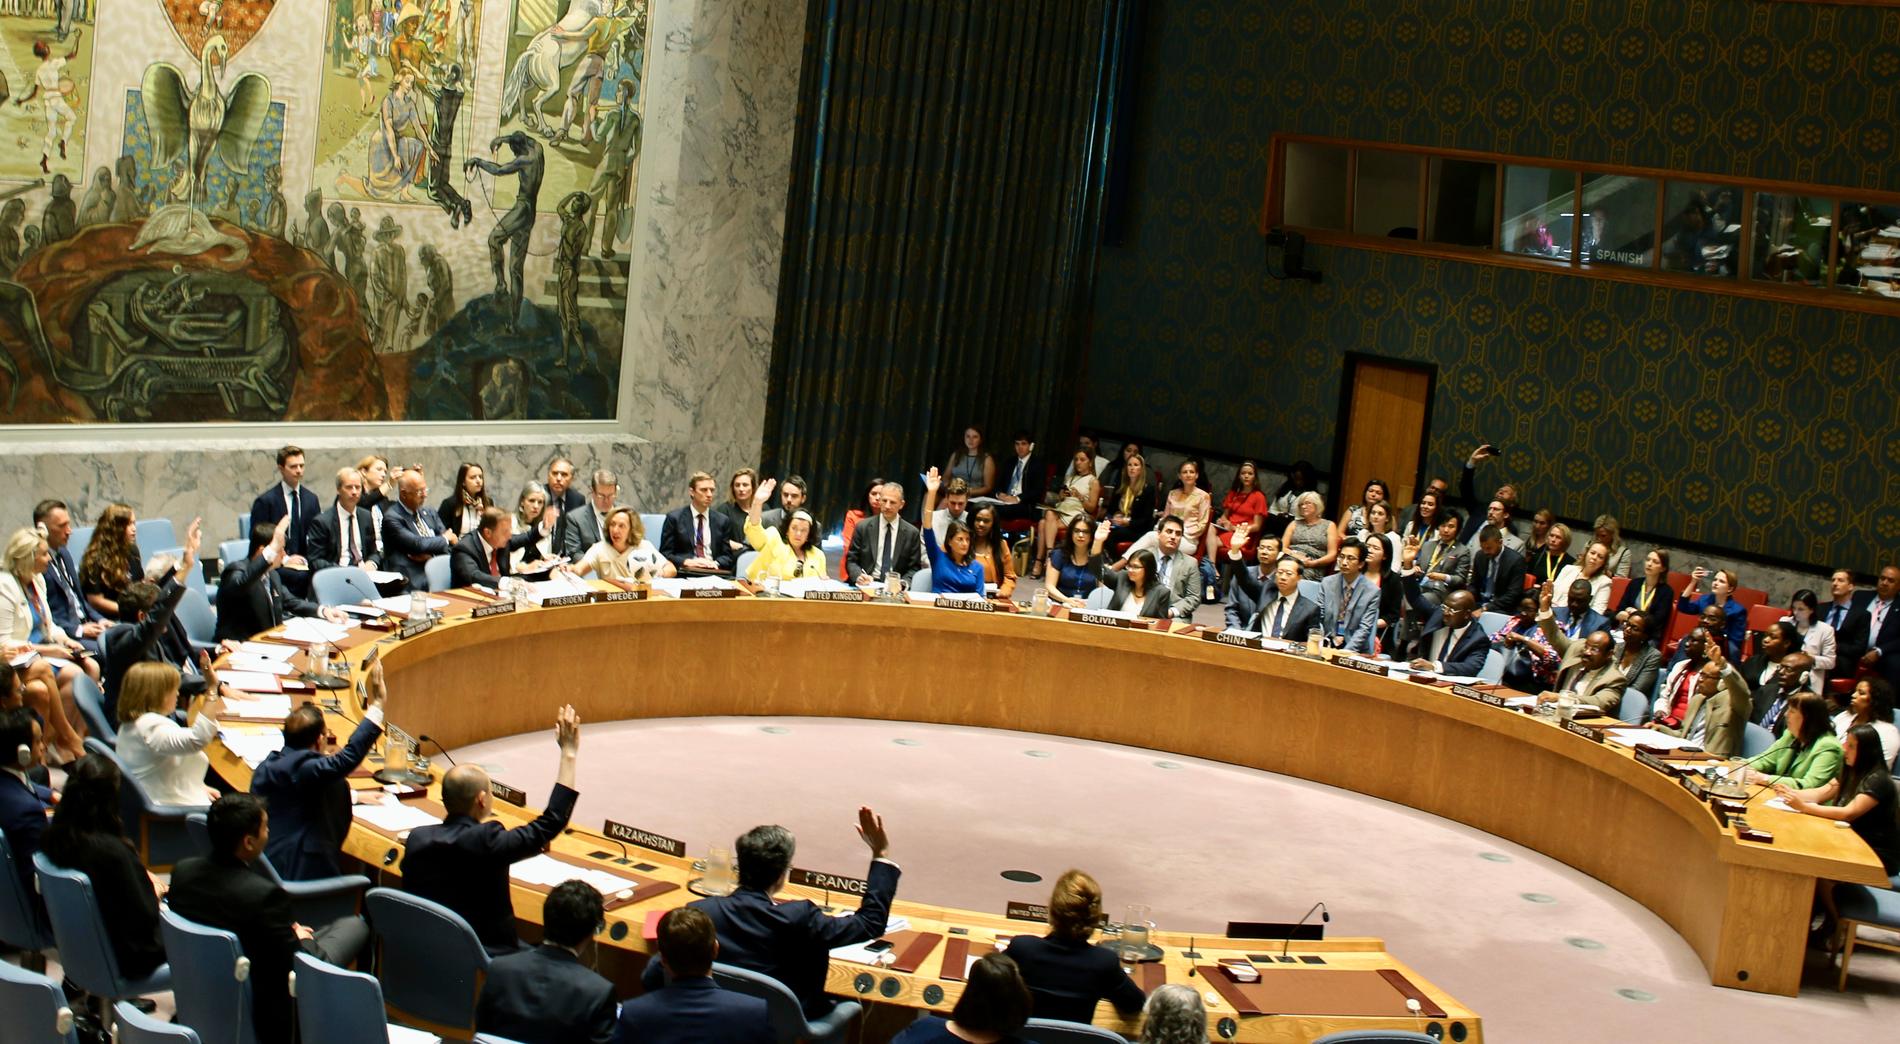 Votering om resolution i FN:s säkerhetsråd under ledning av statsminister Stefan Löfven (S).